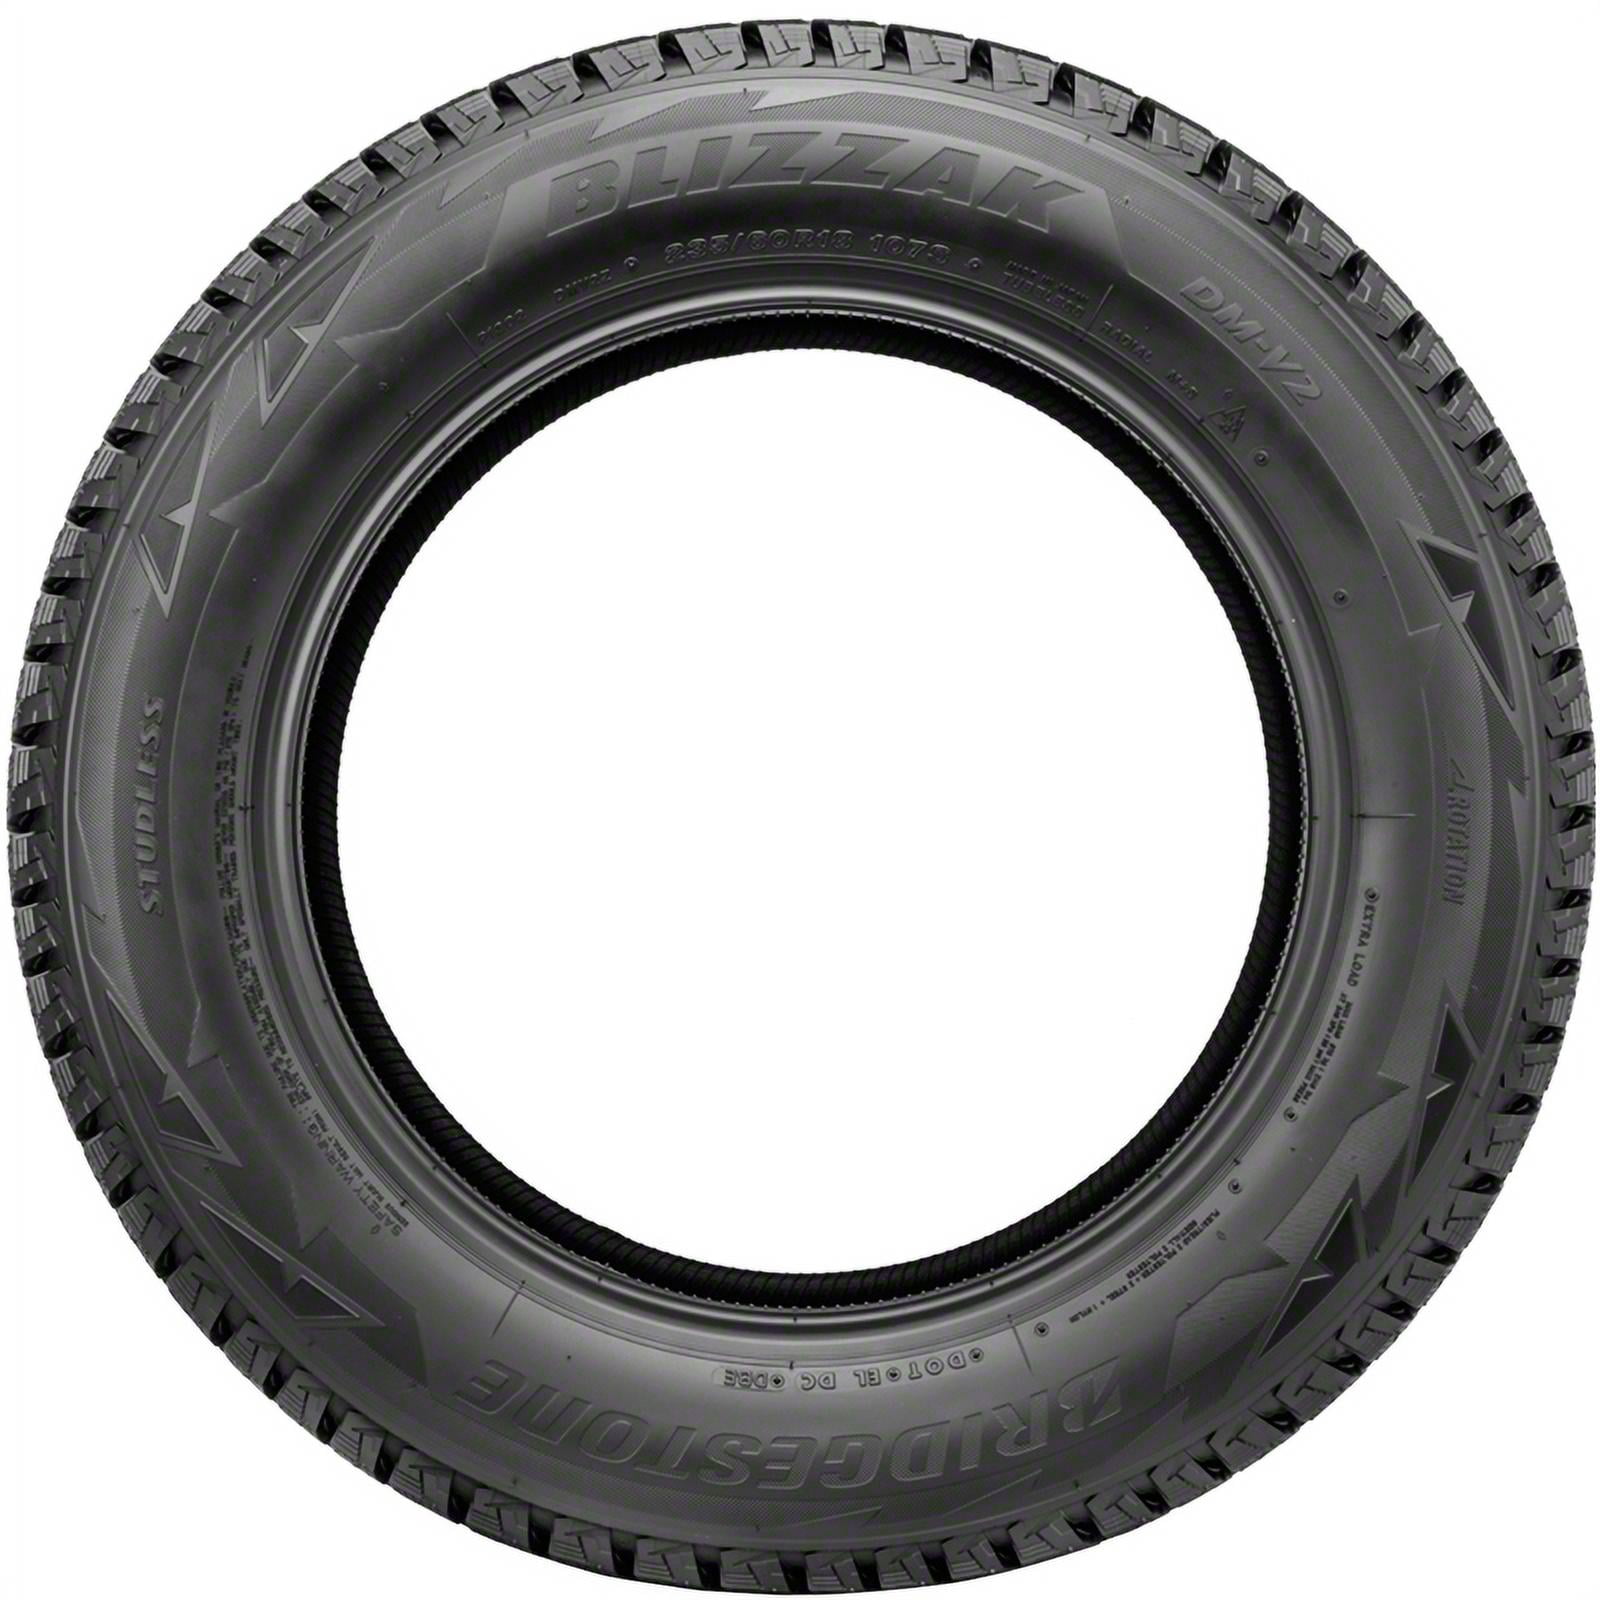 DM-V2 108 Bridgestone 235/65-17 S Tire Blizzak